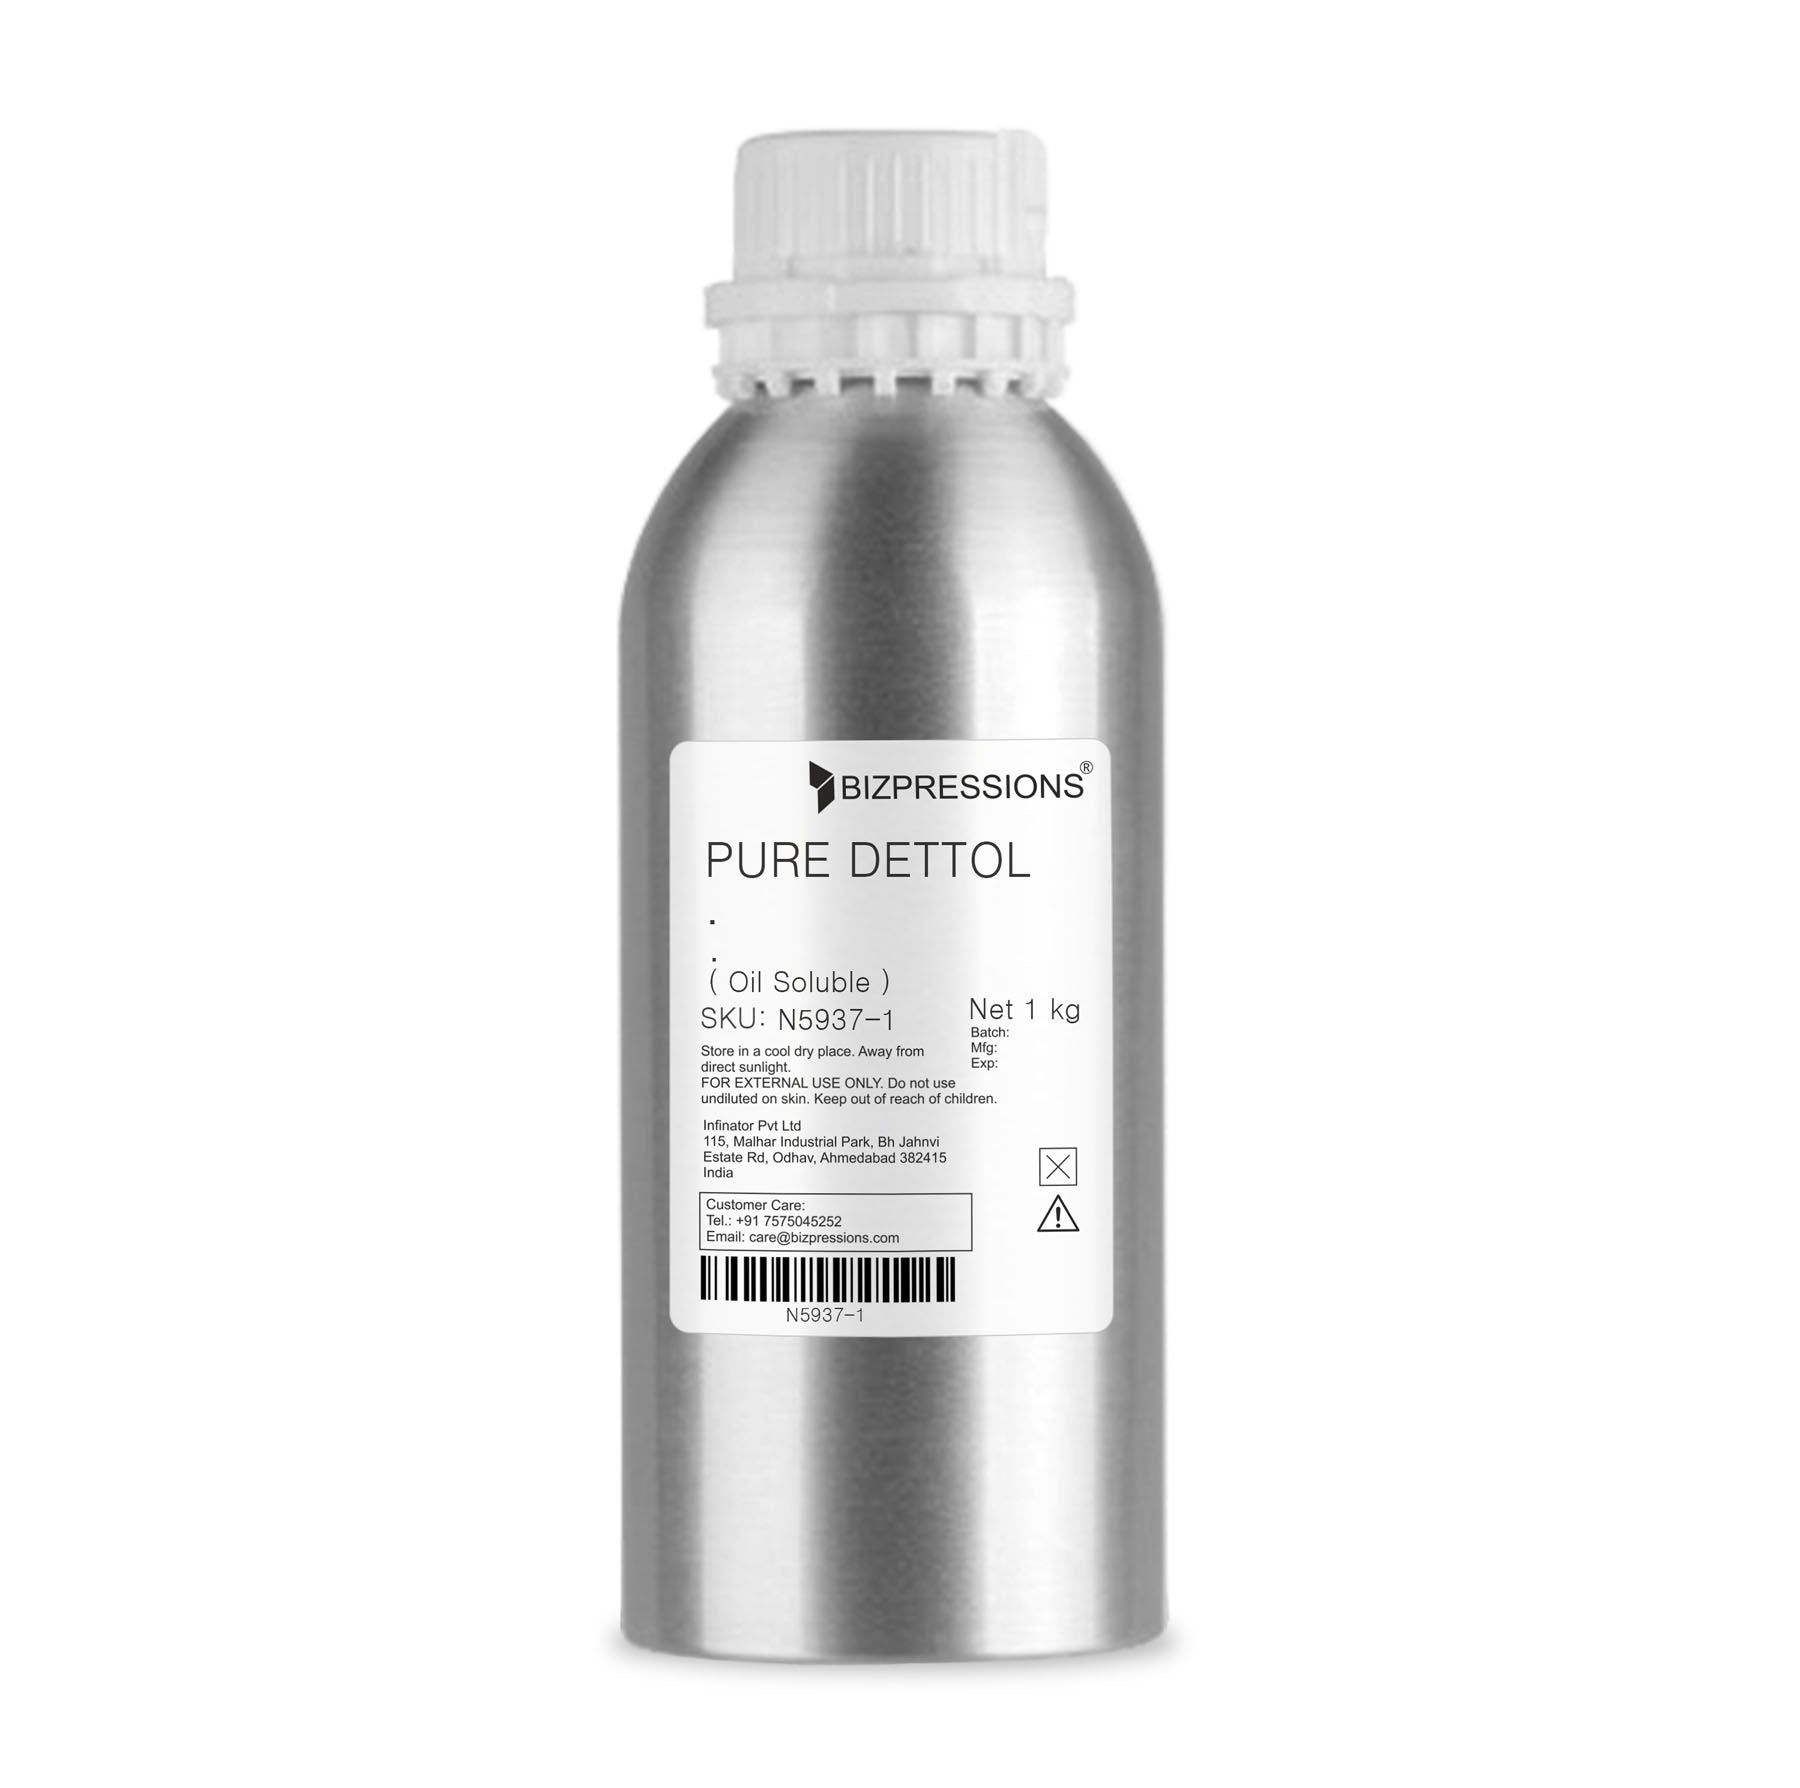 PURE DETTOL - Fragrance ( Oil Soluble ) - 1 kg